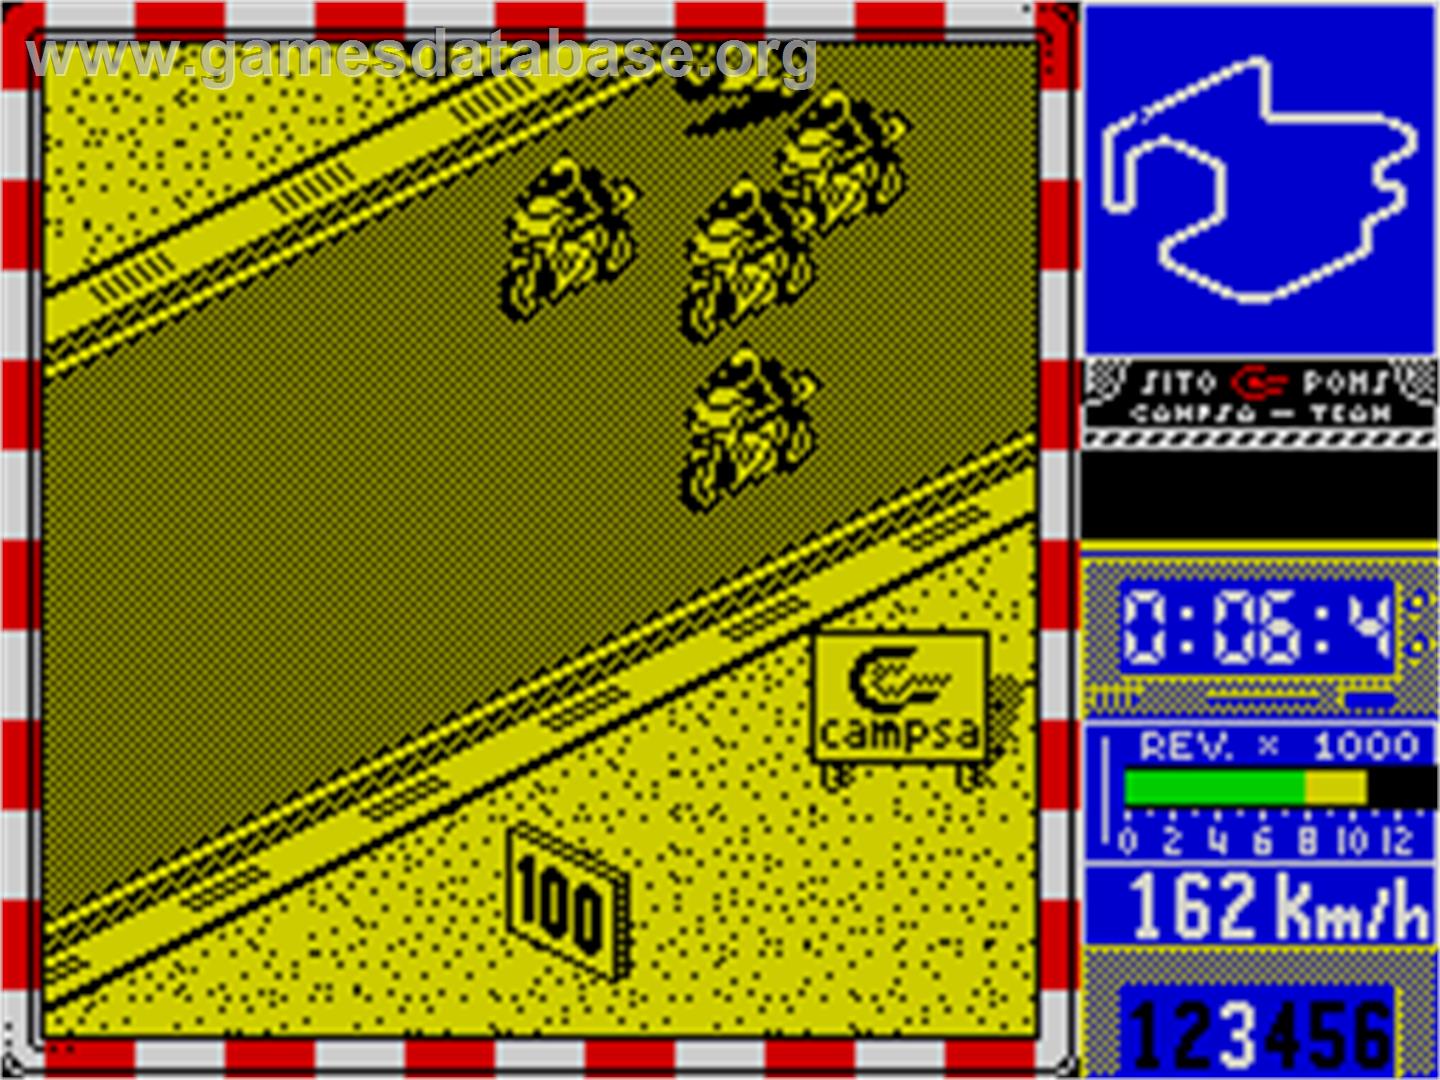 Sito Pons 500cc Grand Prix - Sinclair ZX Spectrum - Artwork - In Game